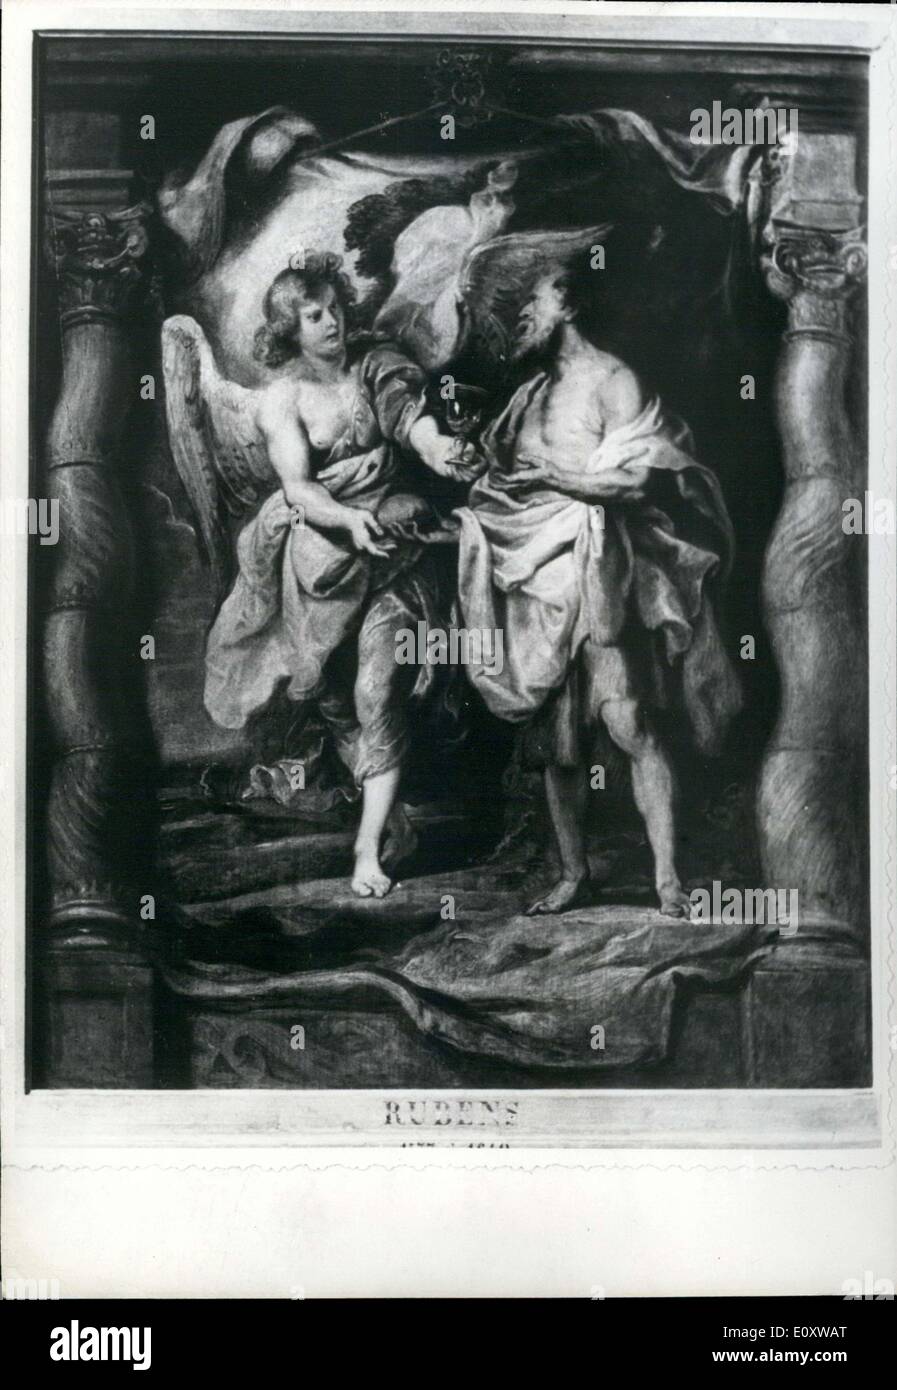 Diciembre 01, 1967 - la pintura atribuida a Rubens tomadas al Louvre para verificación APRESS. Foto de stock